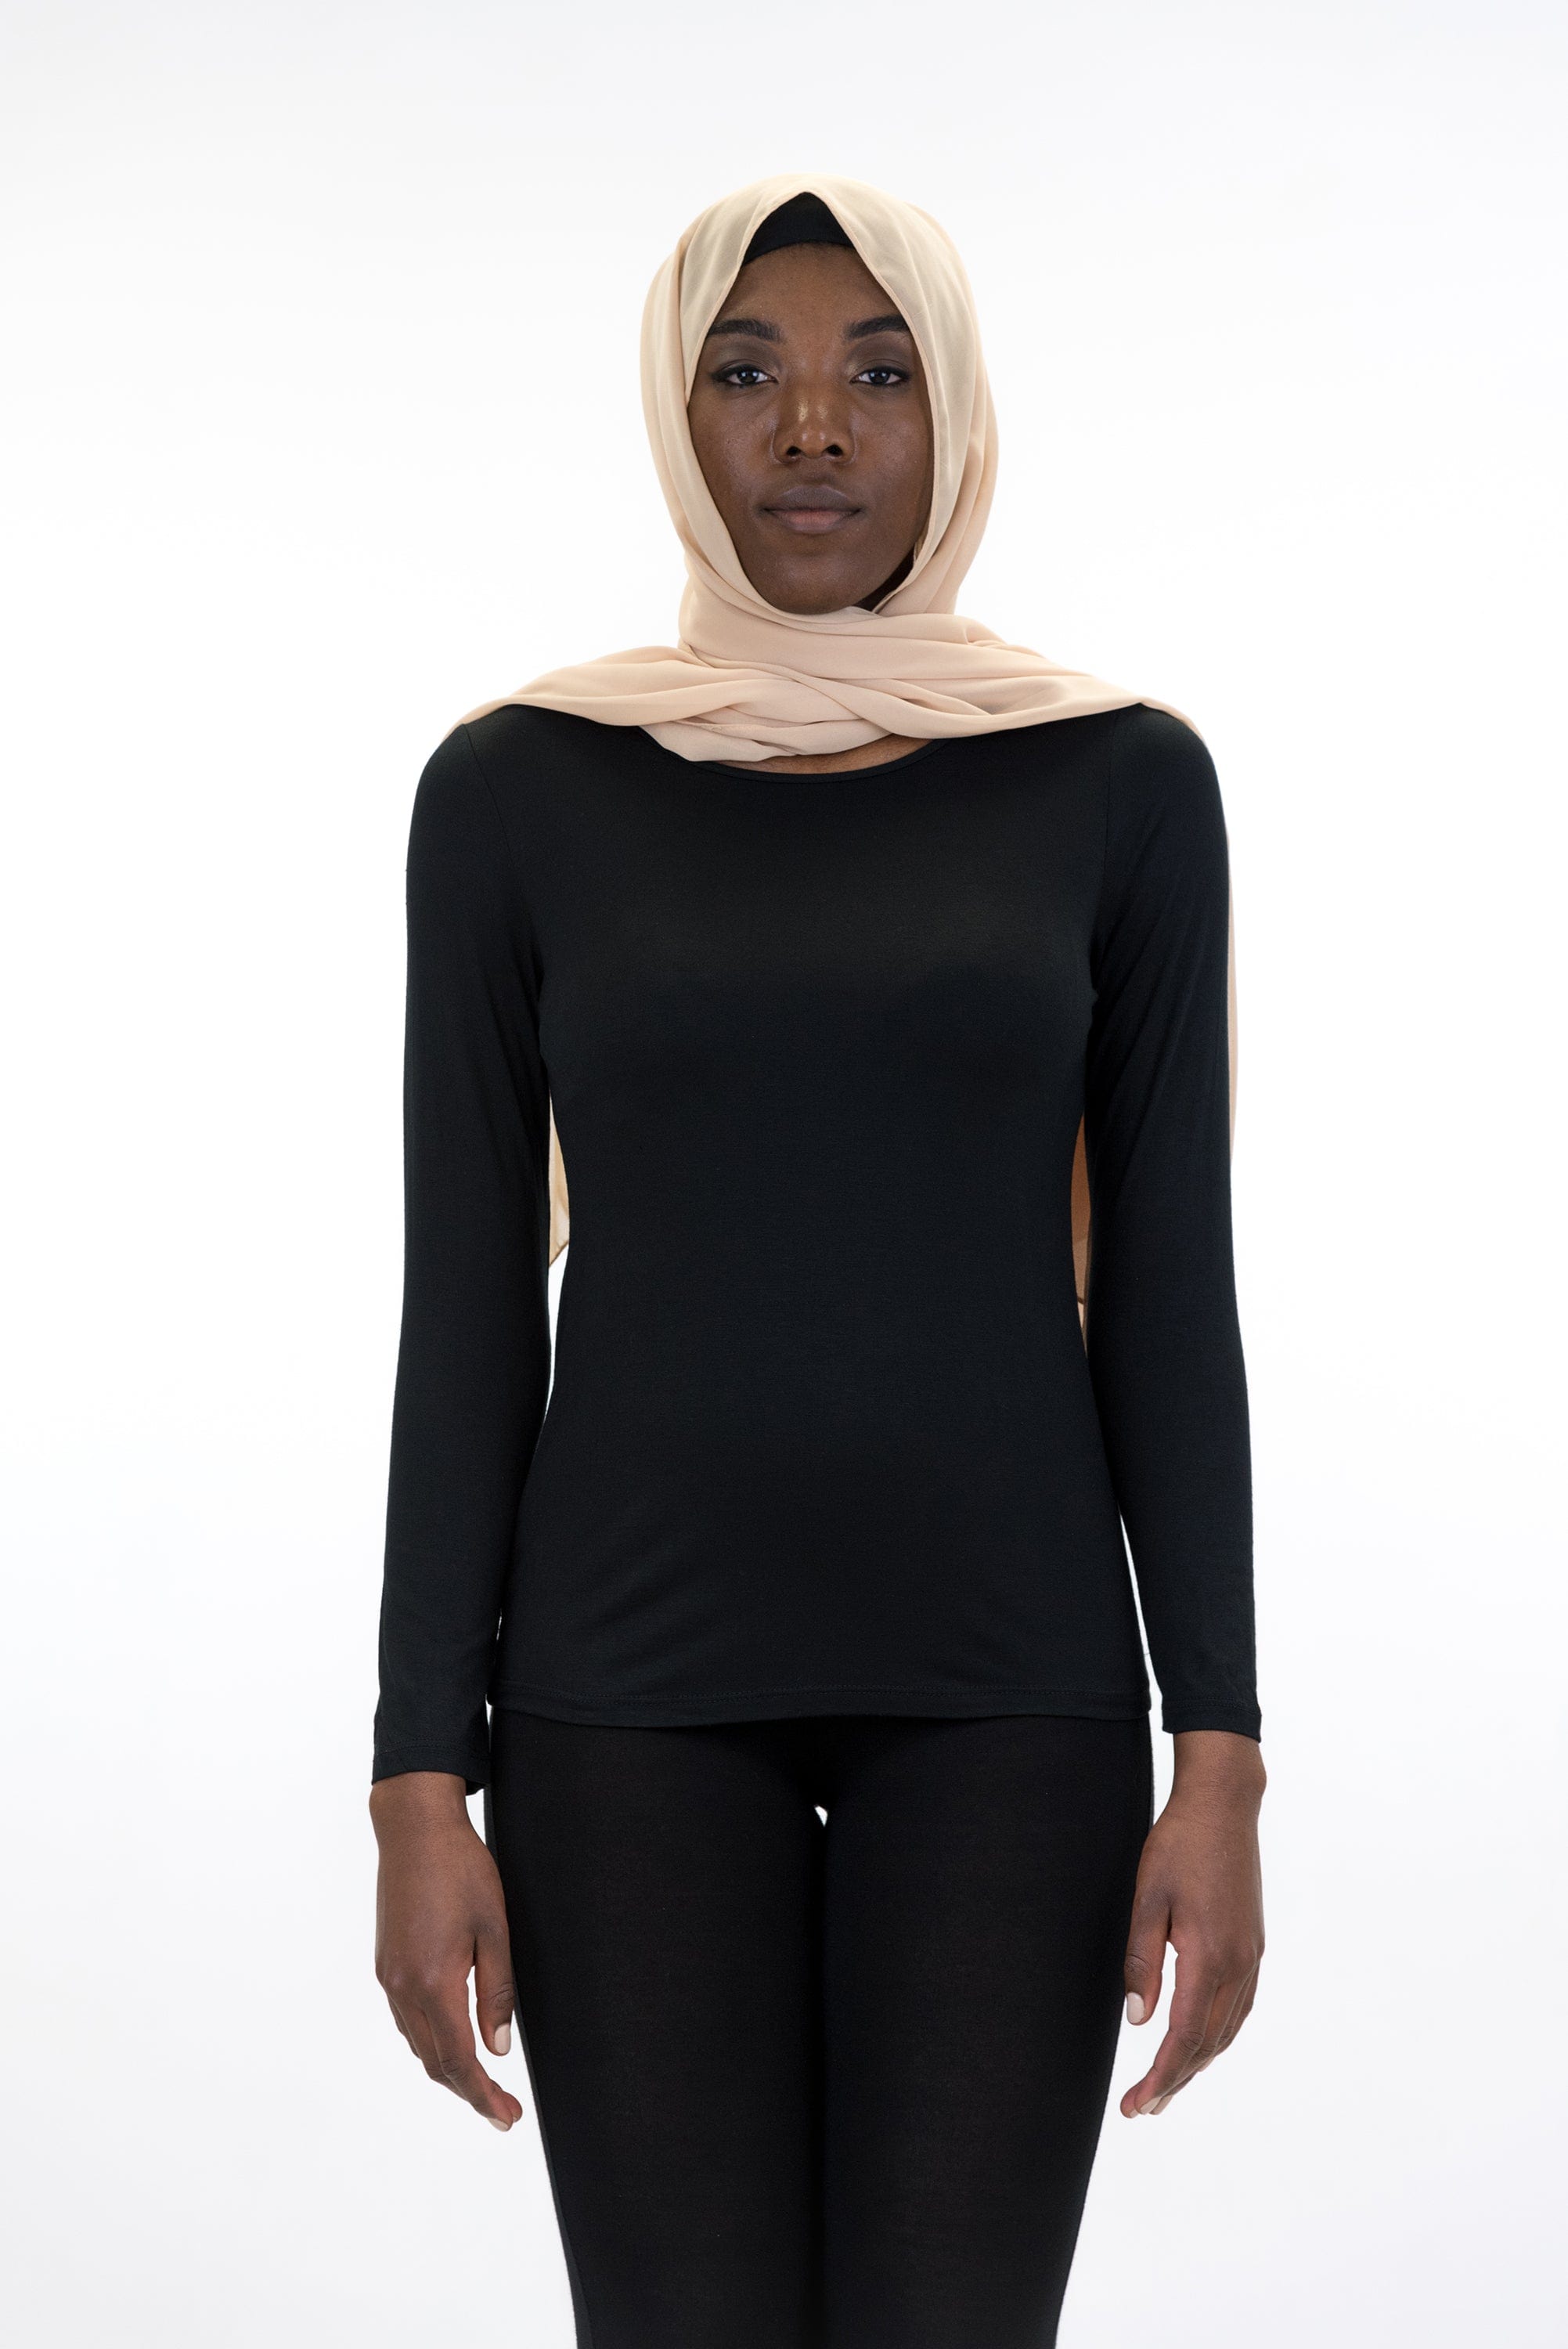 jolienisa Black Women's Basic Mock Neck  Fitted Long Sleeve Pullovers Tee Top